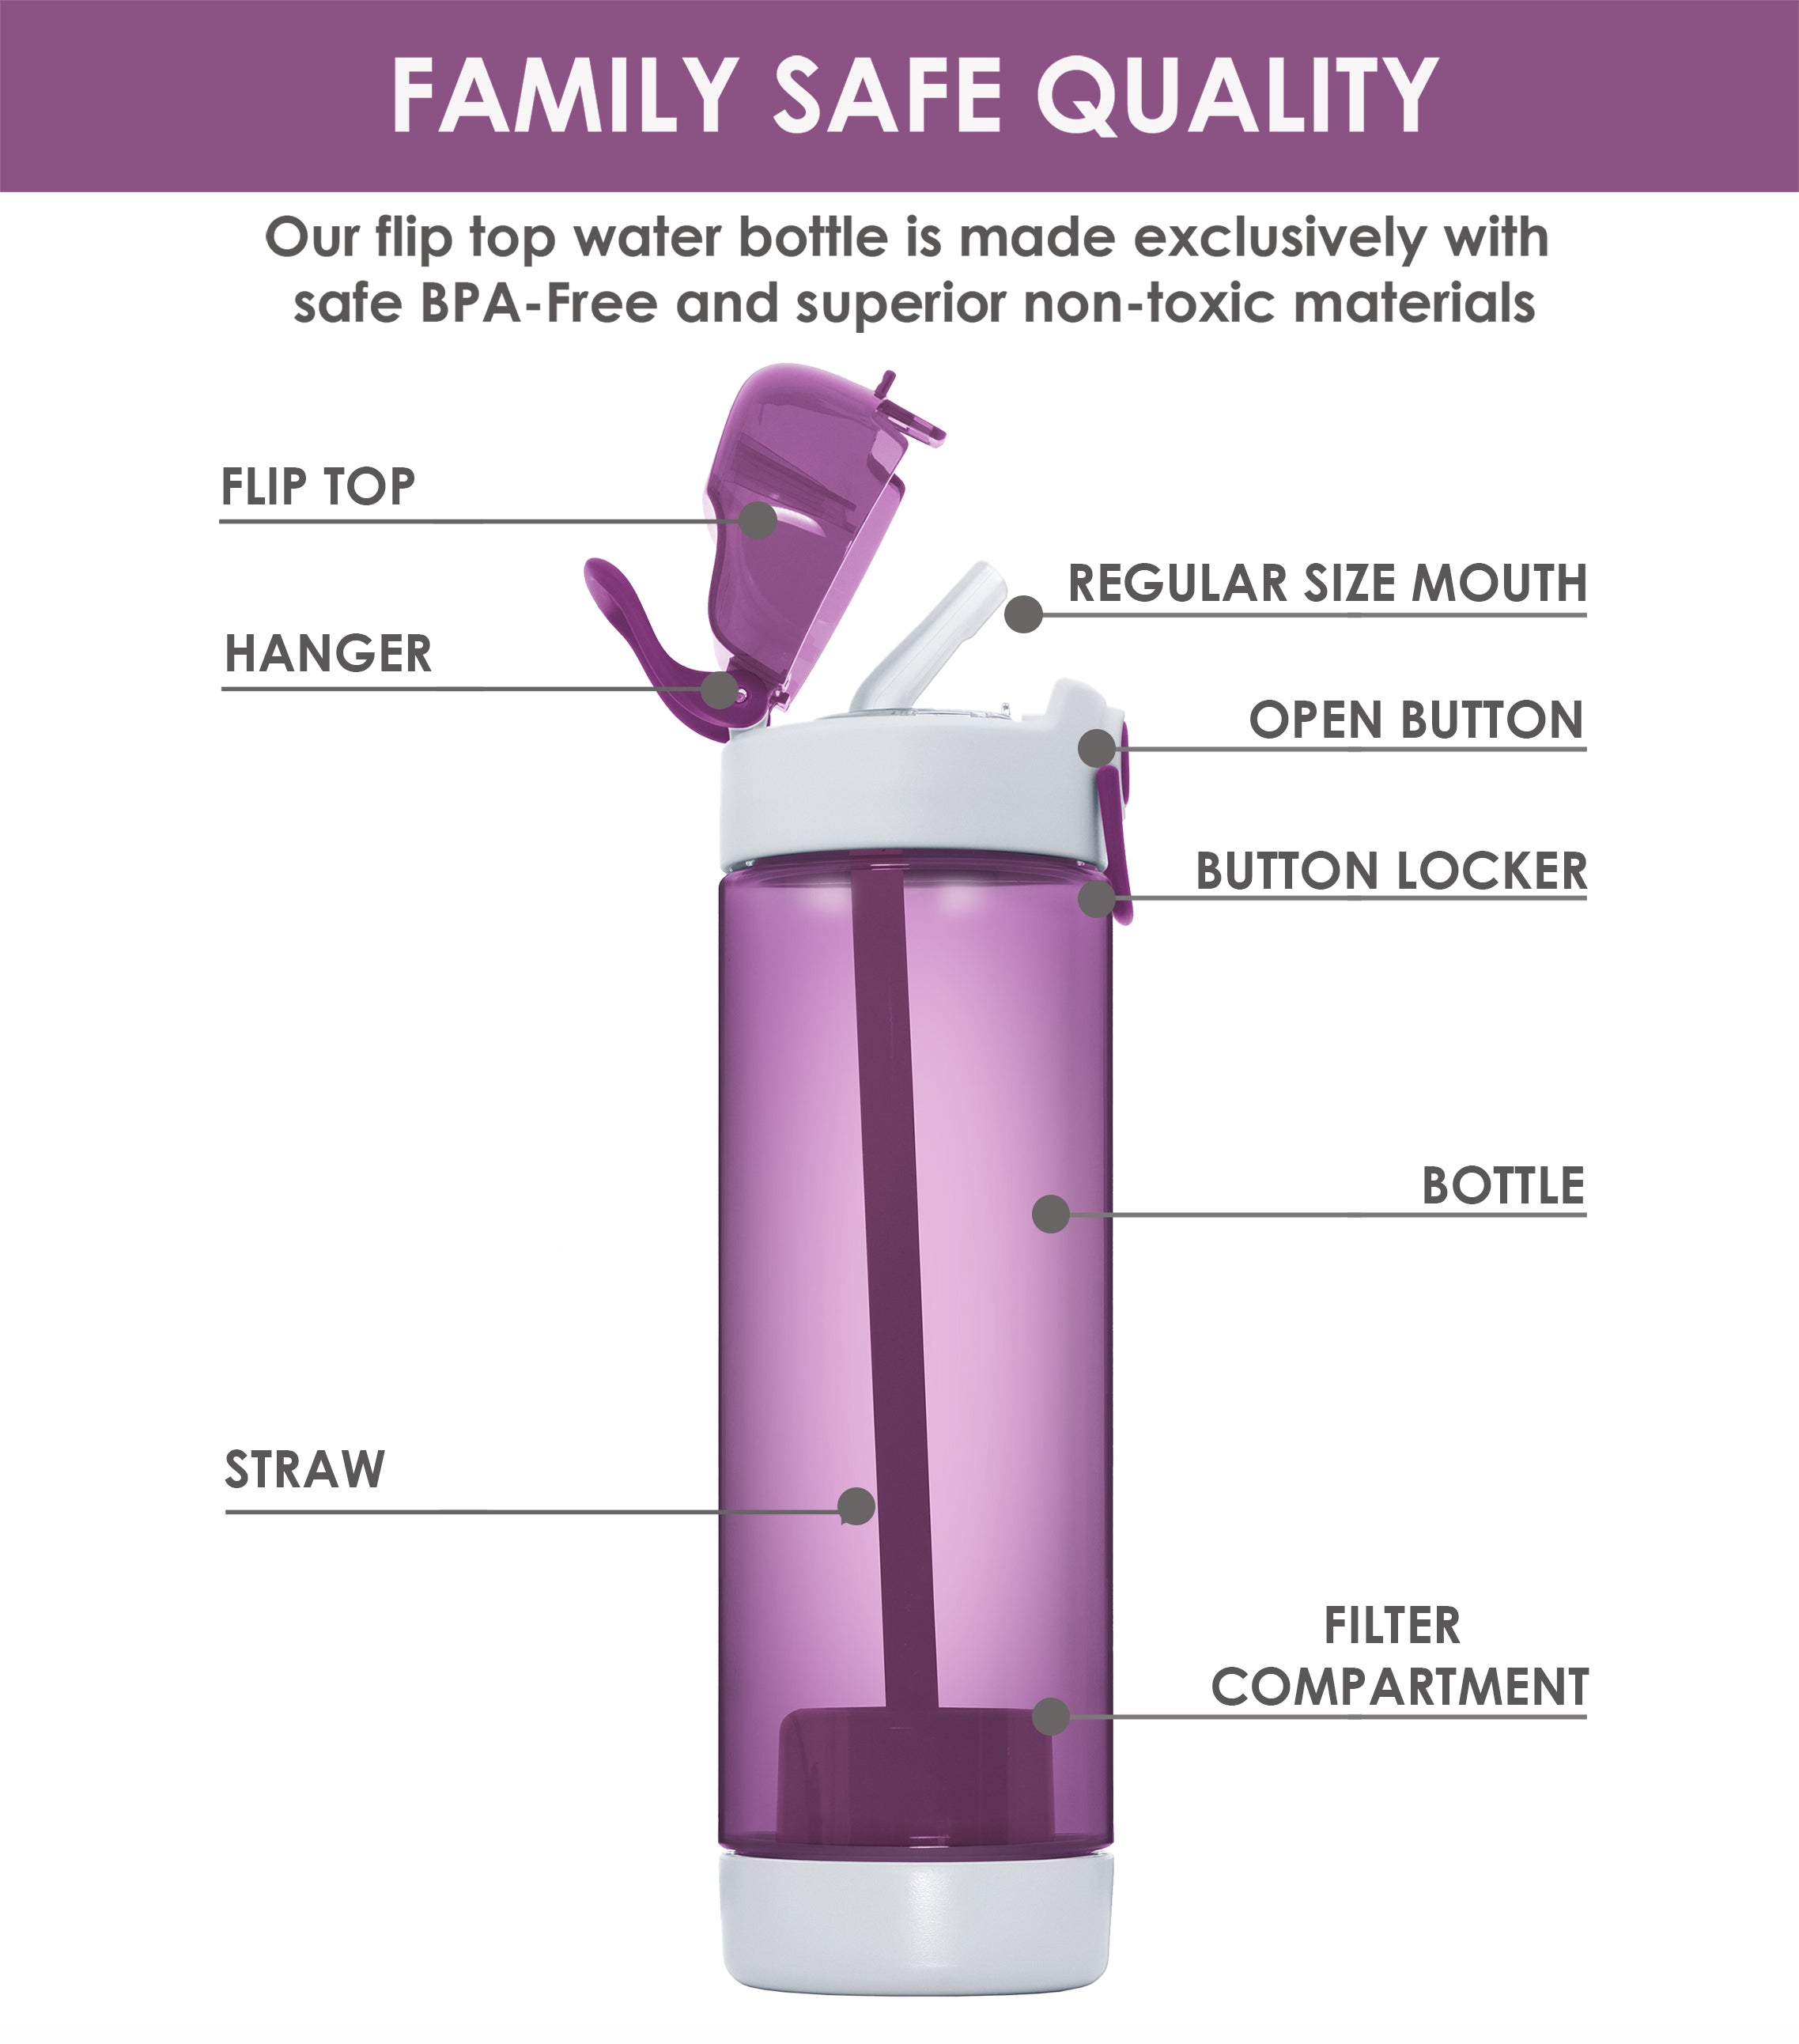 Brita Premium 26oz Water Bottle with Filter - Blush Pink